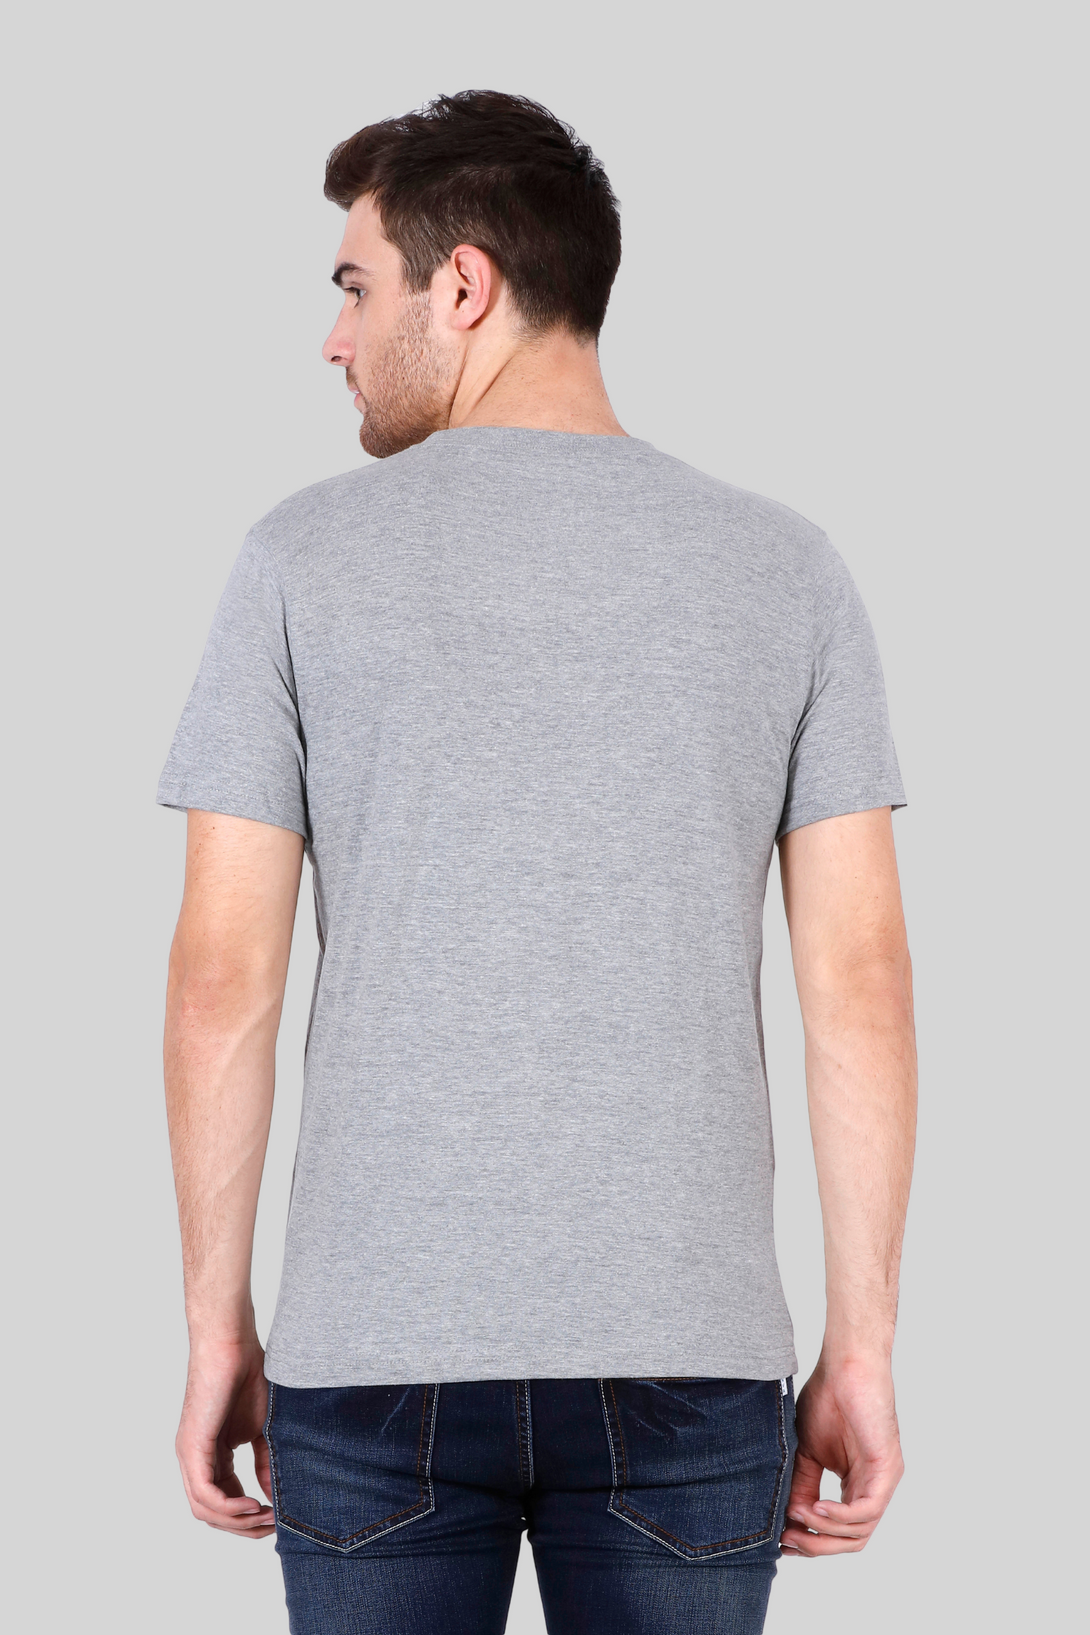 Grey Melange V Neck T-Shirt For Men - WowWaves - 8